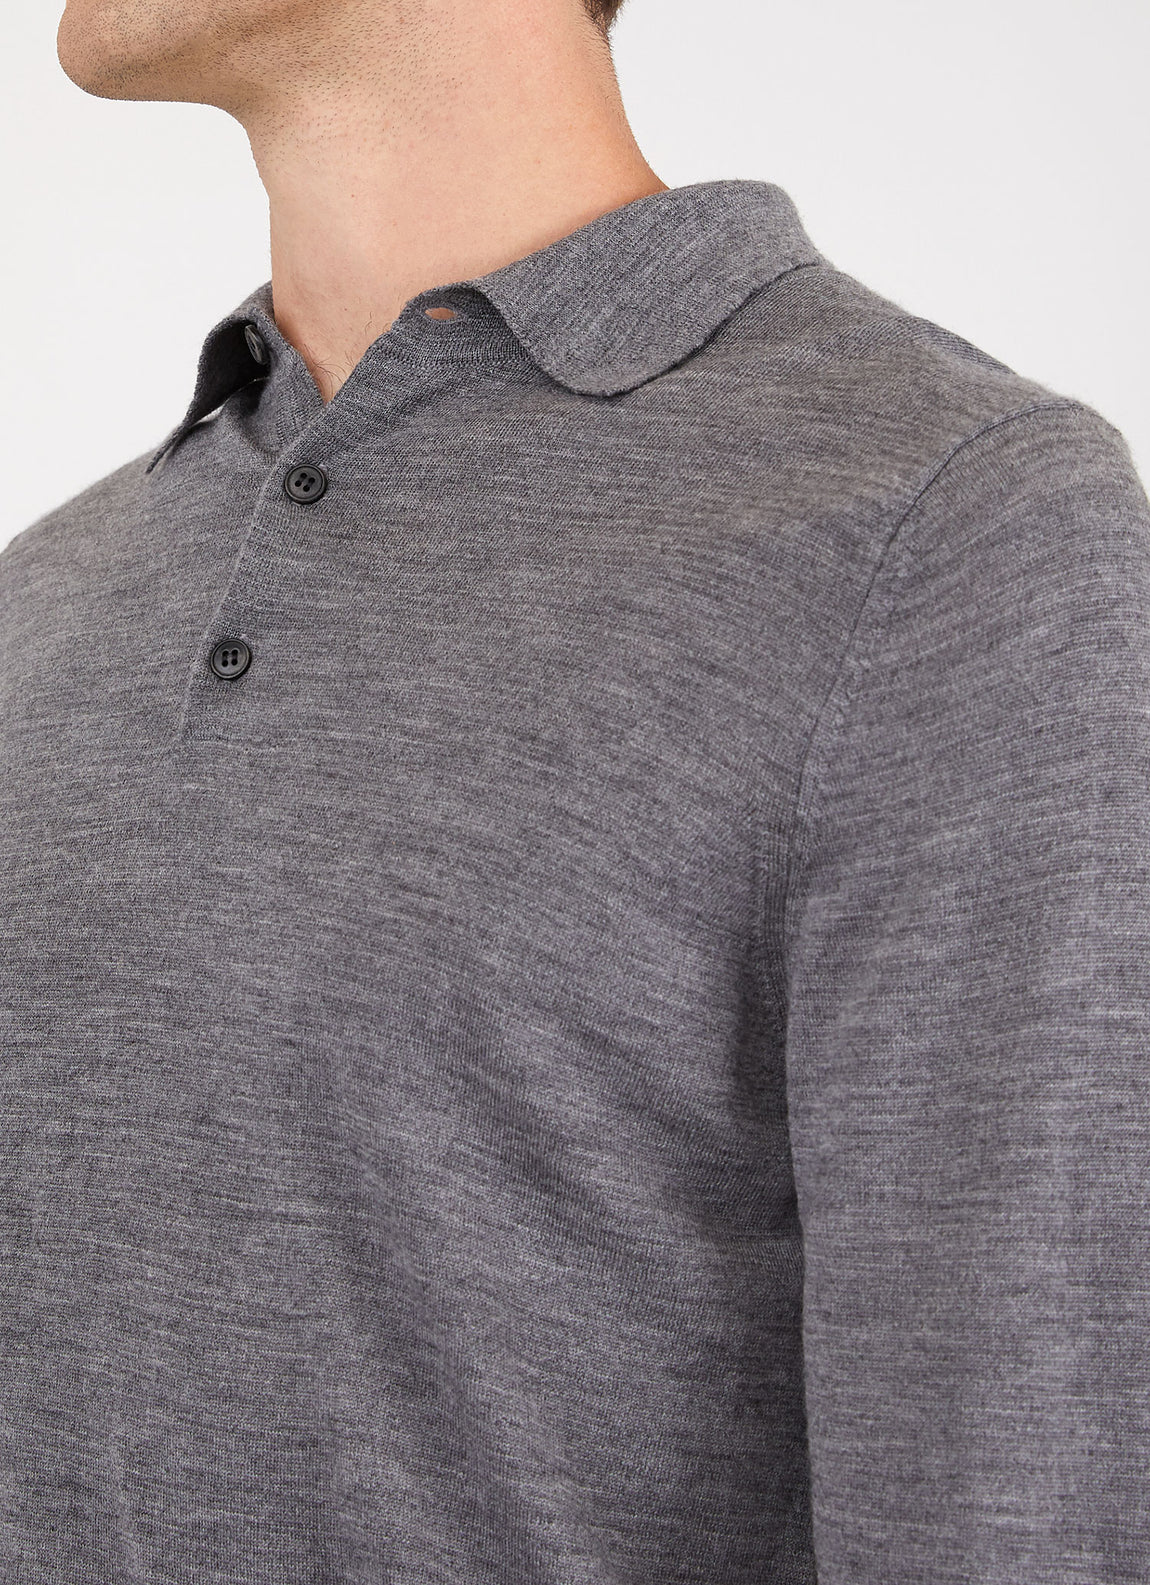 Men's Extra-Fine Merino Polo Shirt in Mid Grey Melange | Sunspel